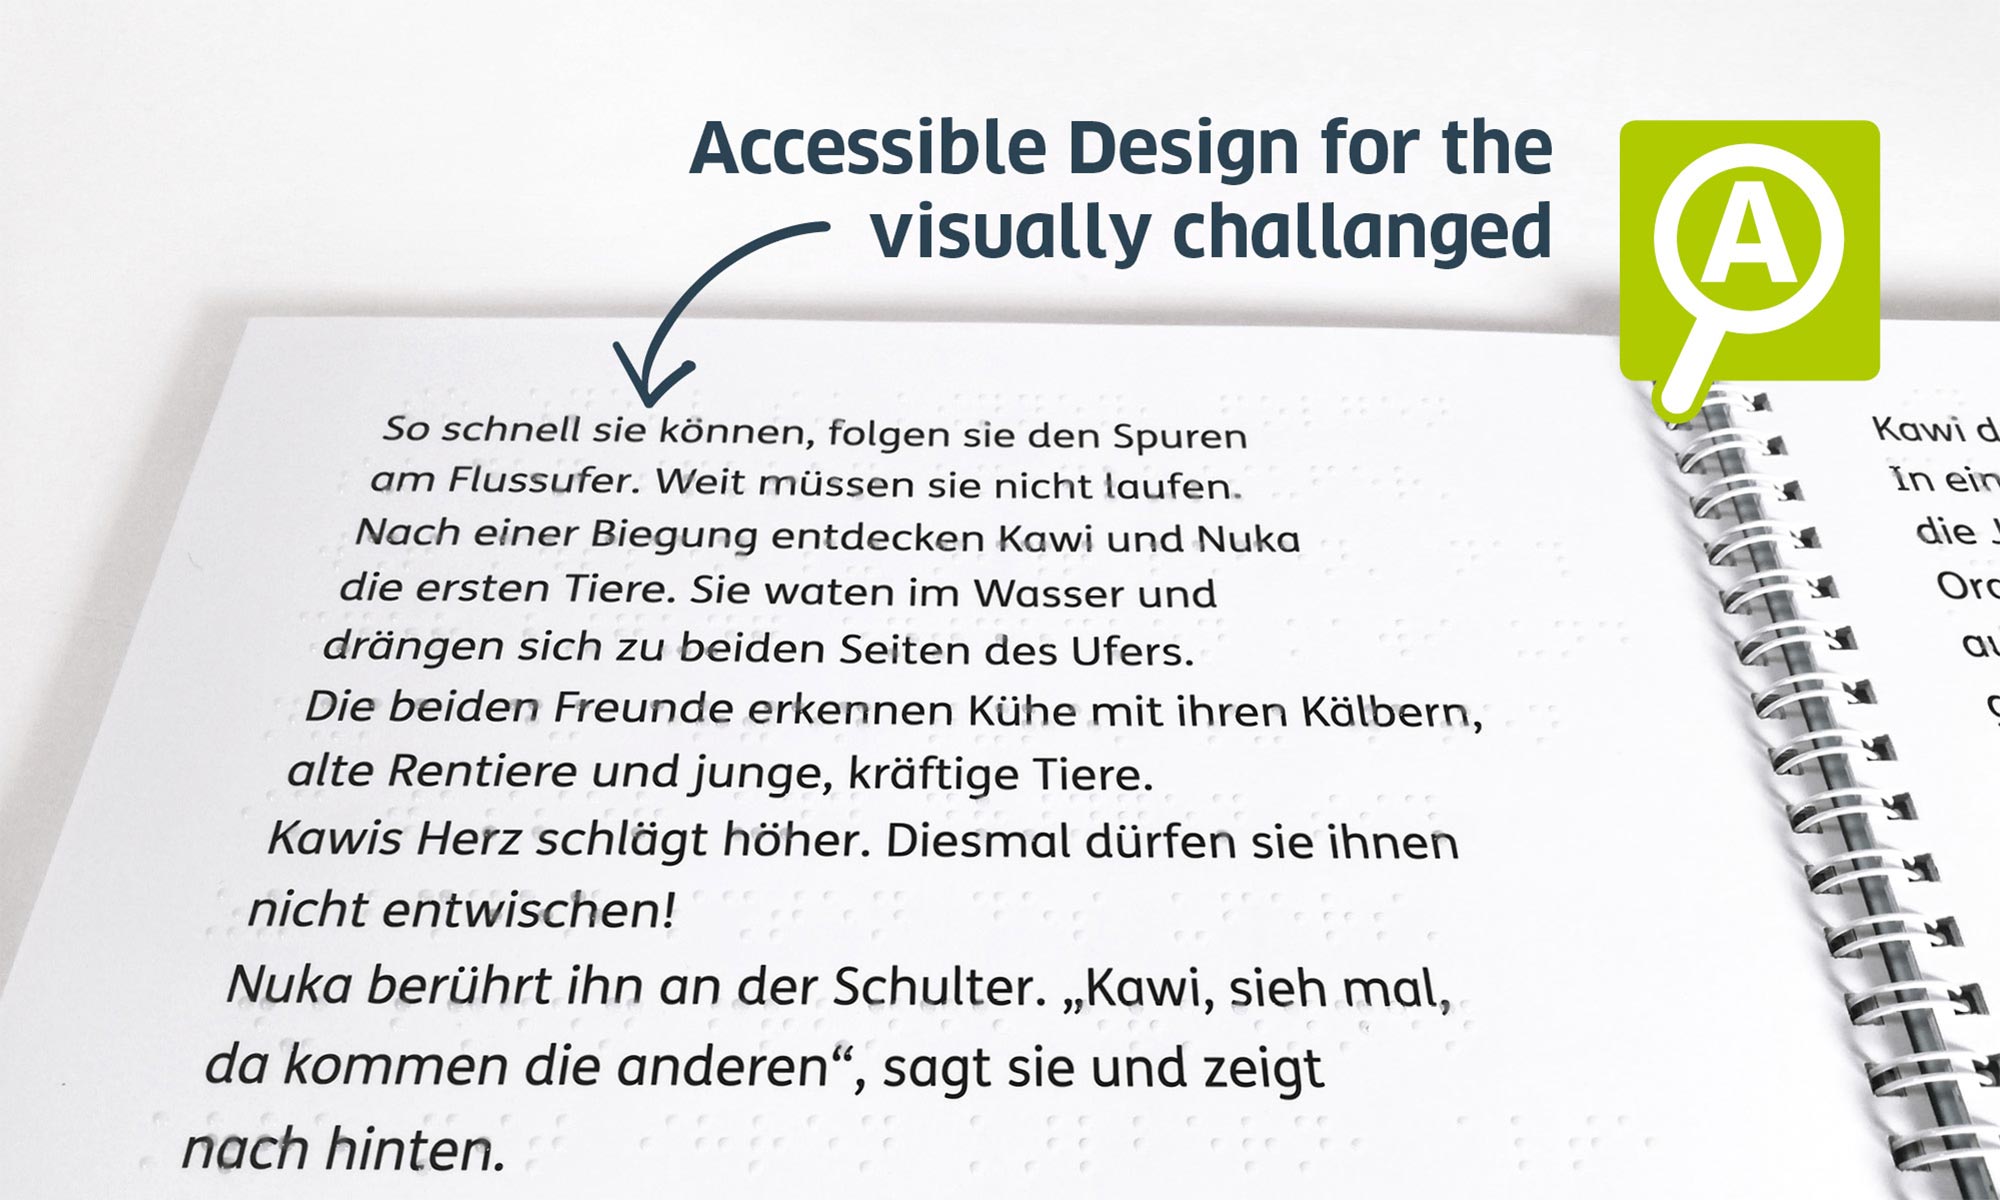 Excerpt from the presentation of the inclusive children's book ”Steinzeit-Abenteuer mit Kawi und Nuka”with marking of visually impaired-friendly design elements.